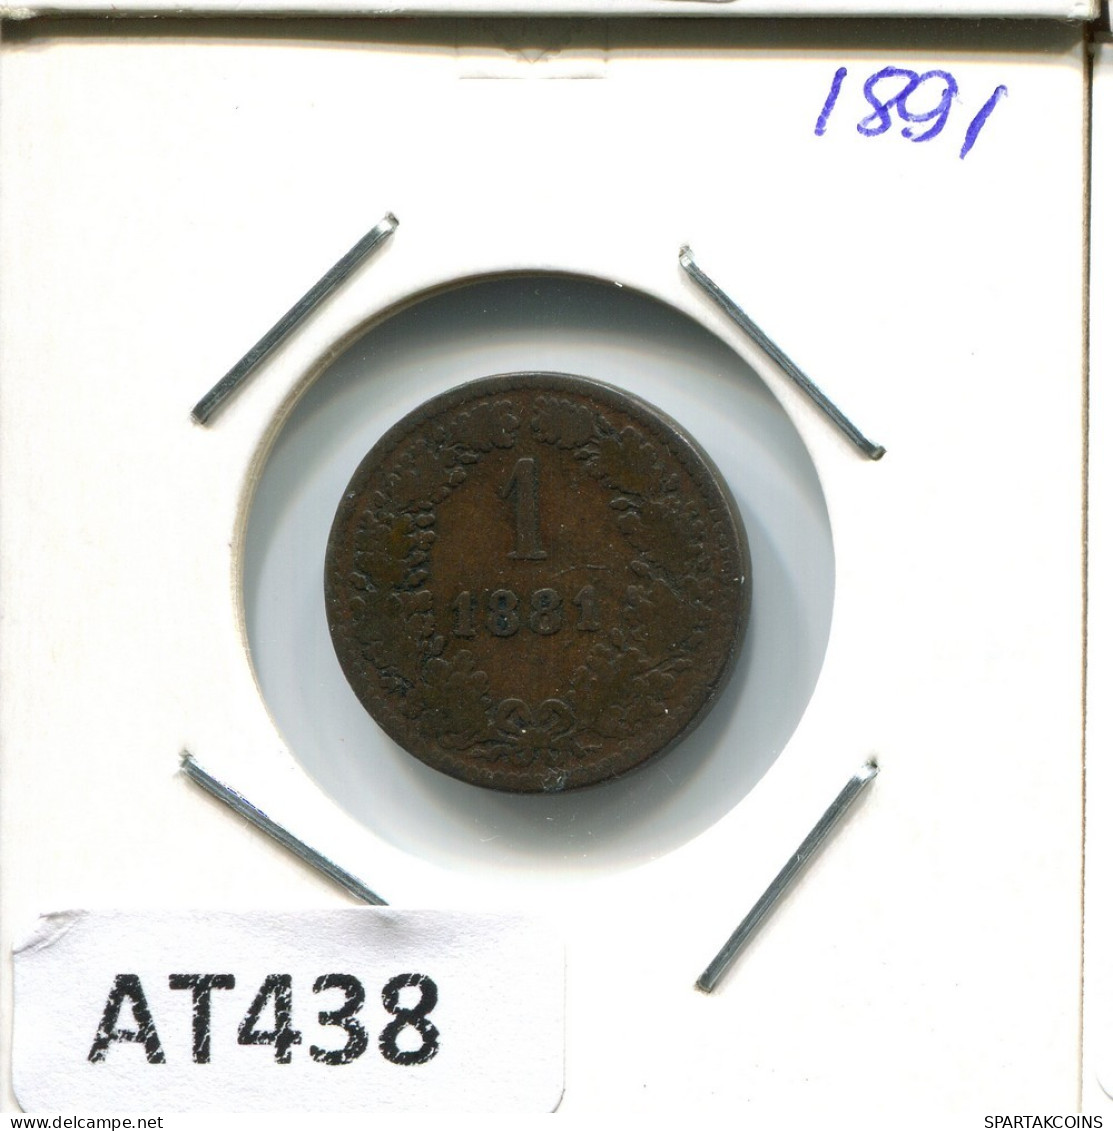 1 KREUZER 1881 AUSTRIA Coin #AT438.U.A - Oesterreich